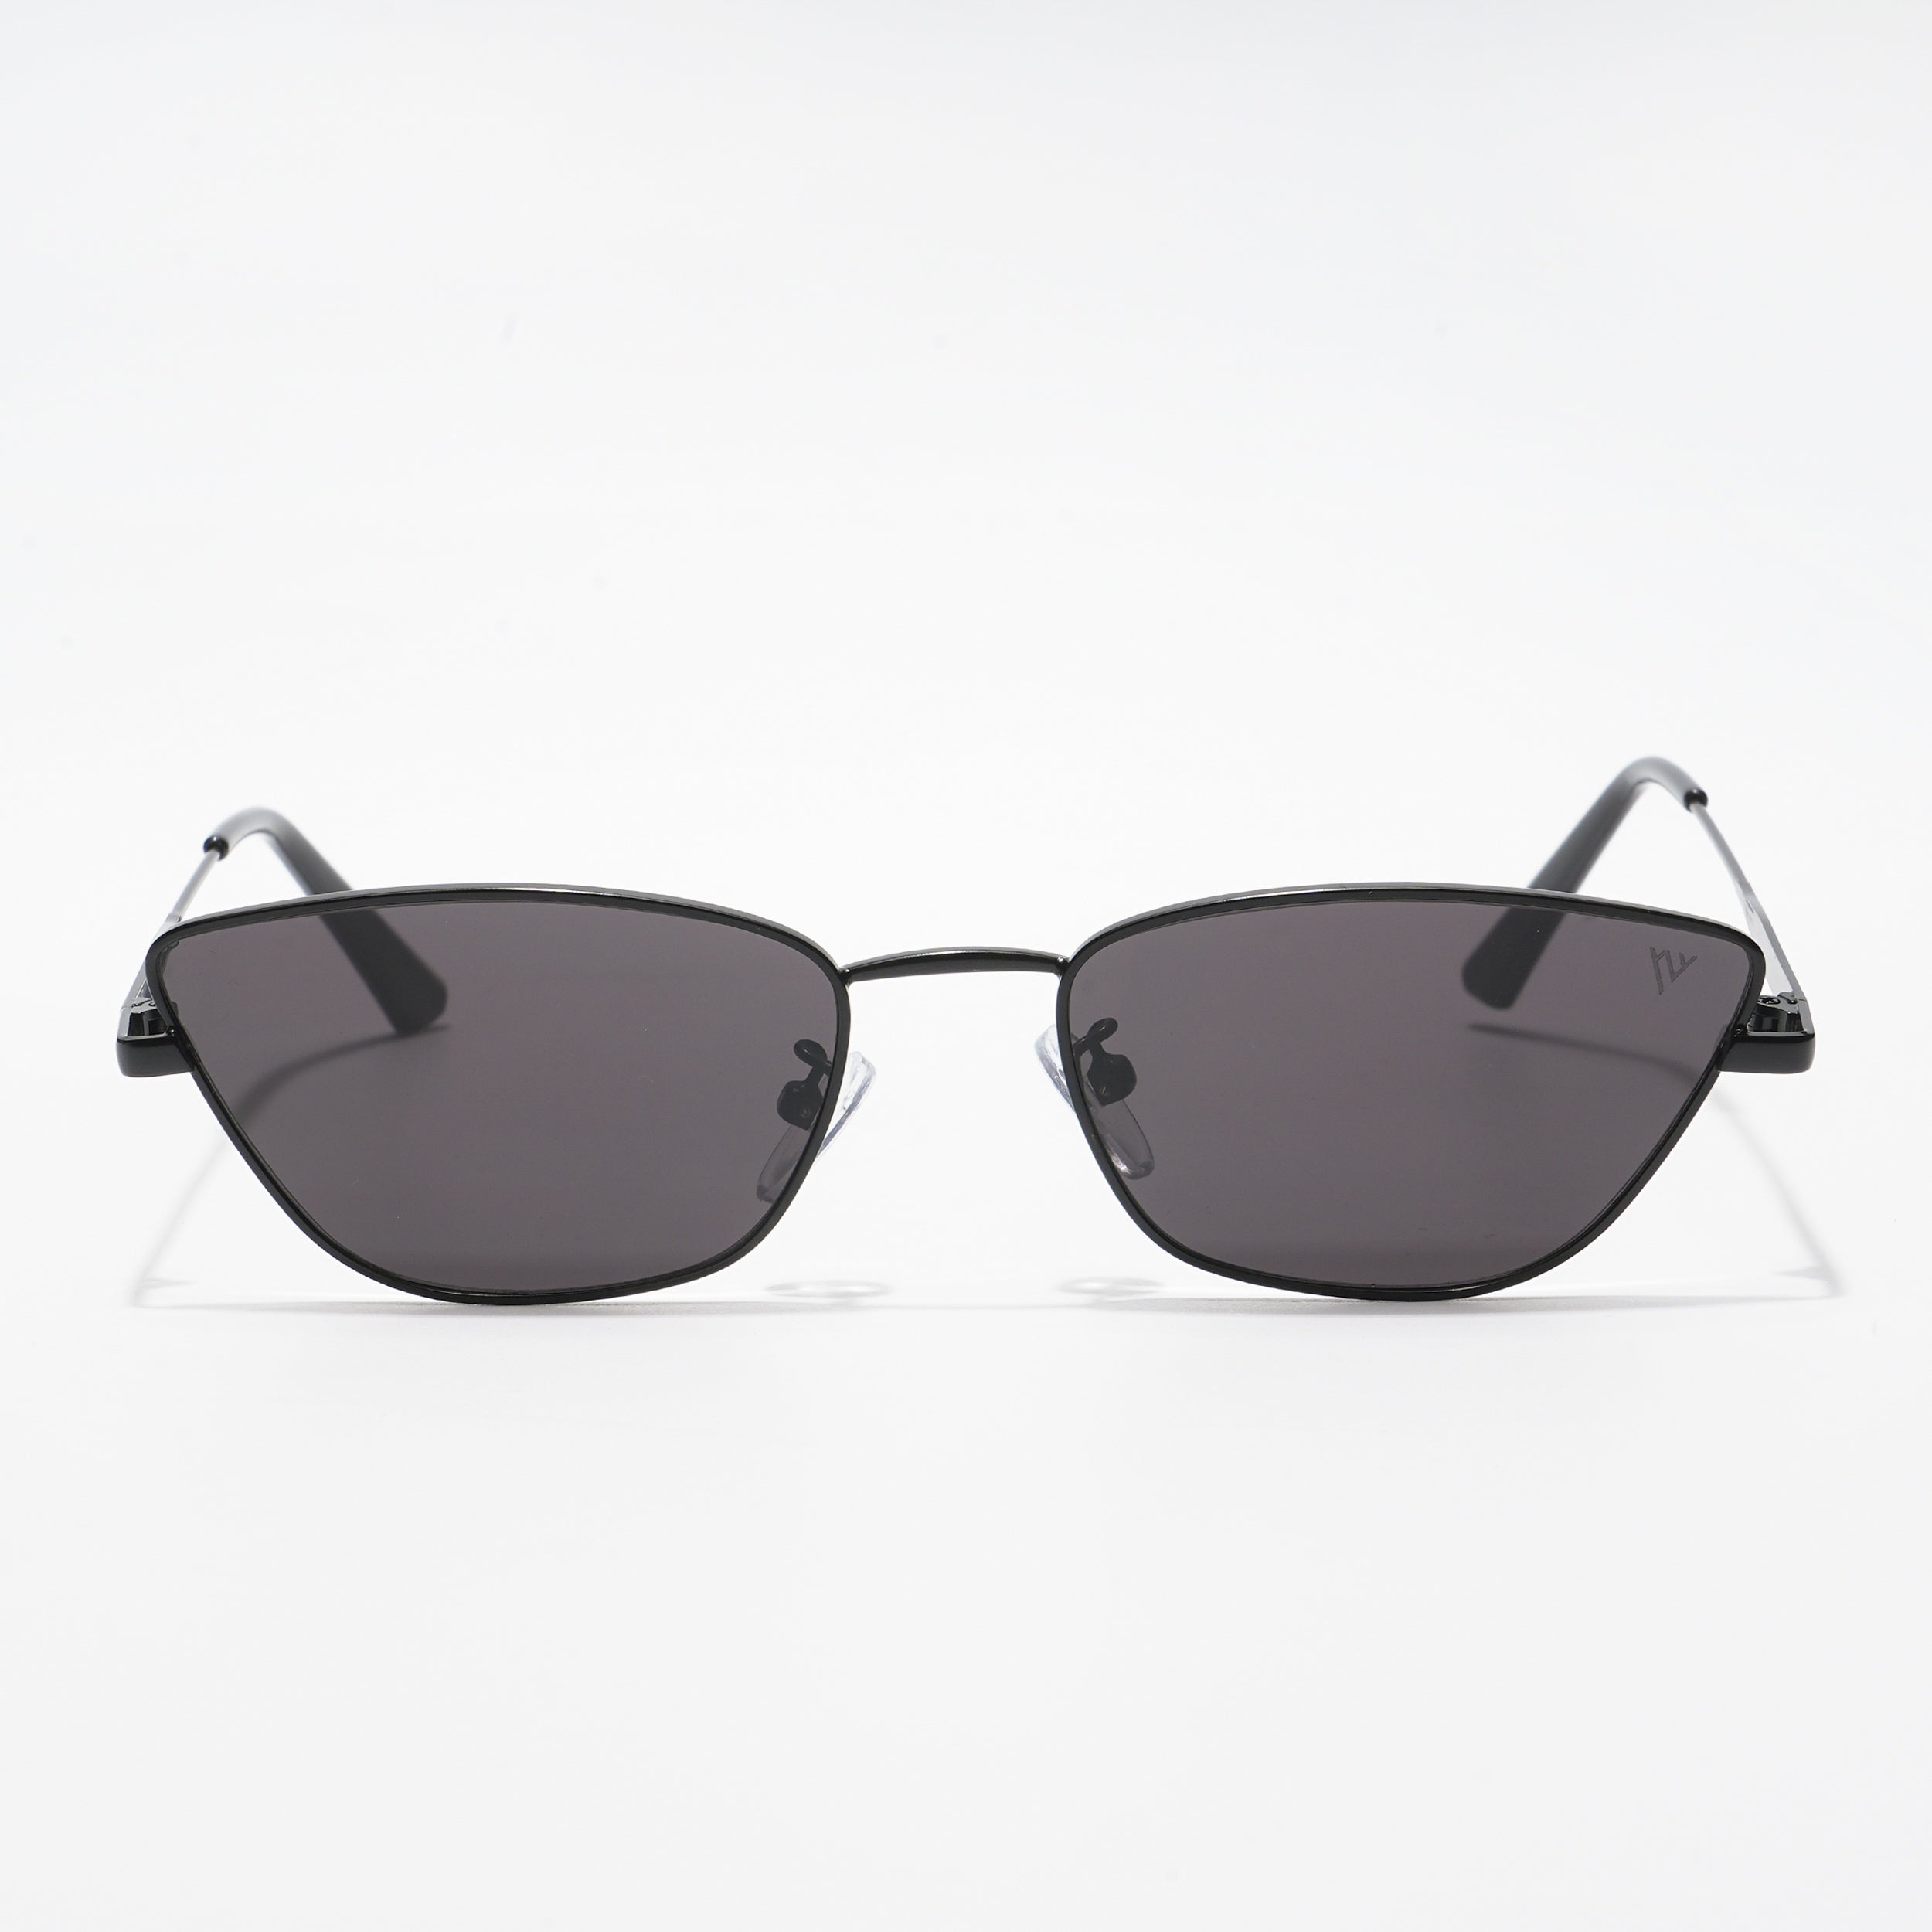 Voyage Black Cateye Sunglasses - MG3446